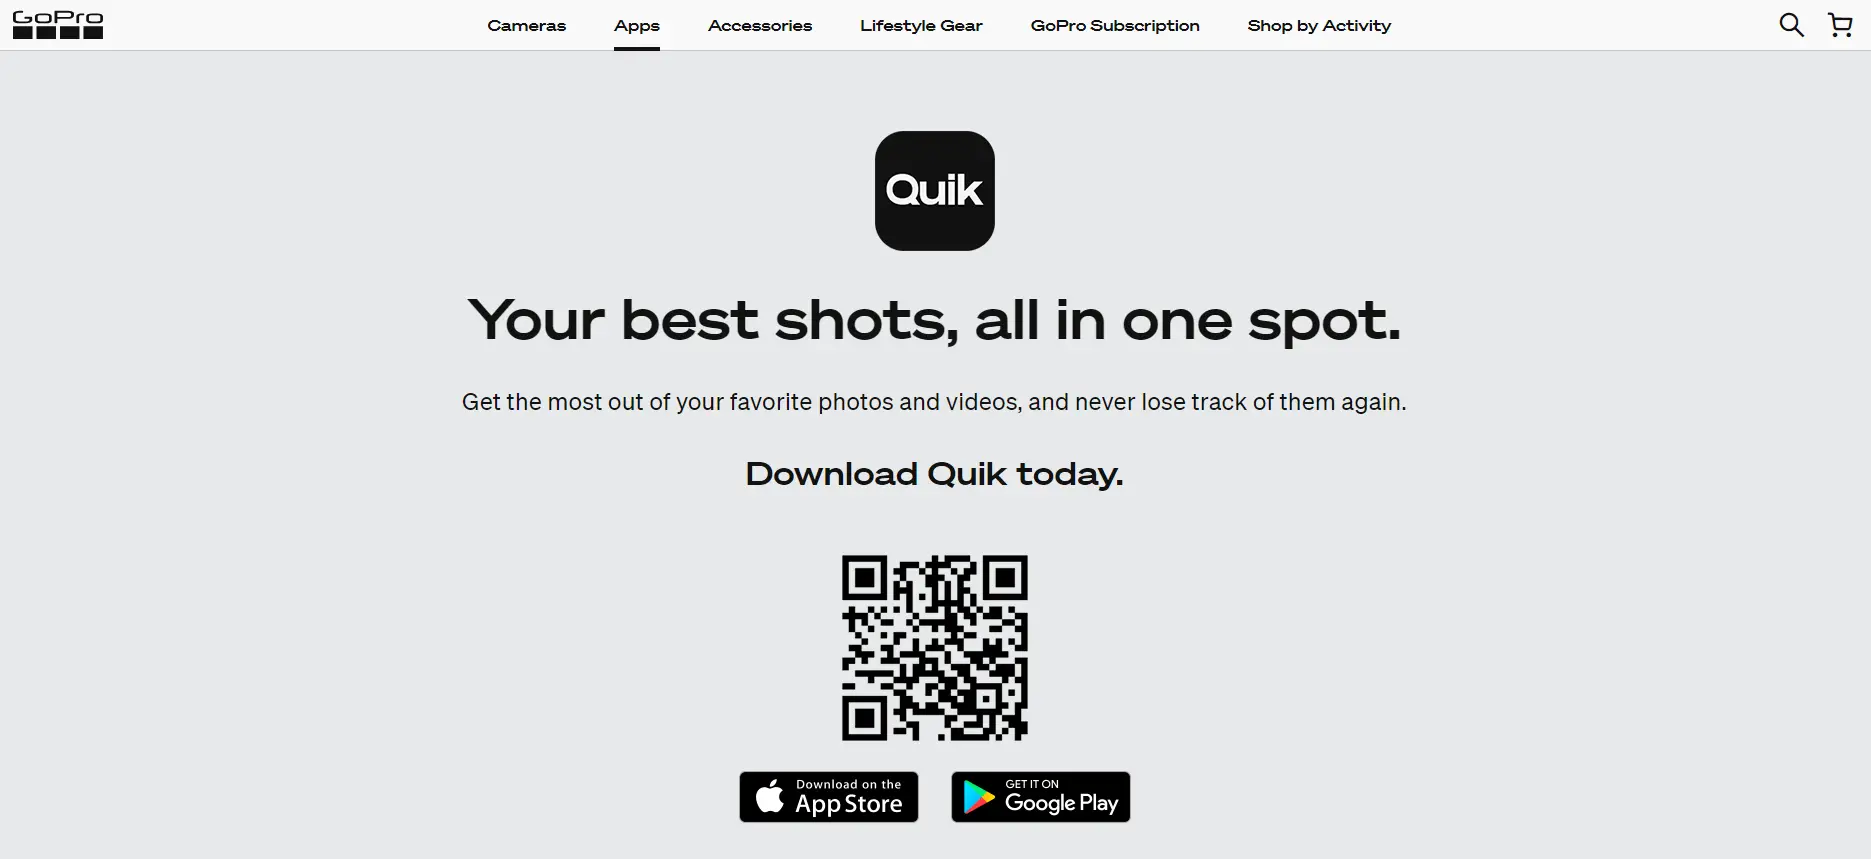 GoPro Quik App Page